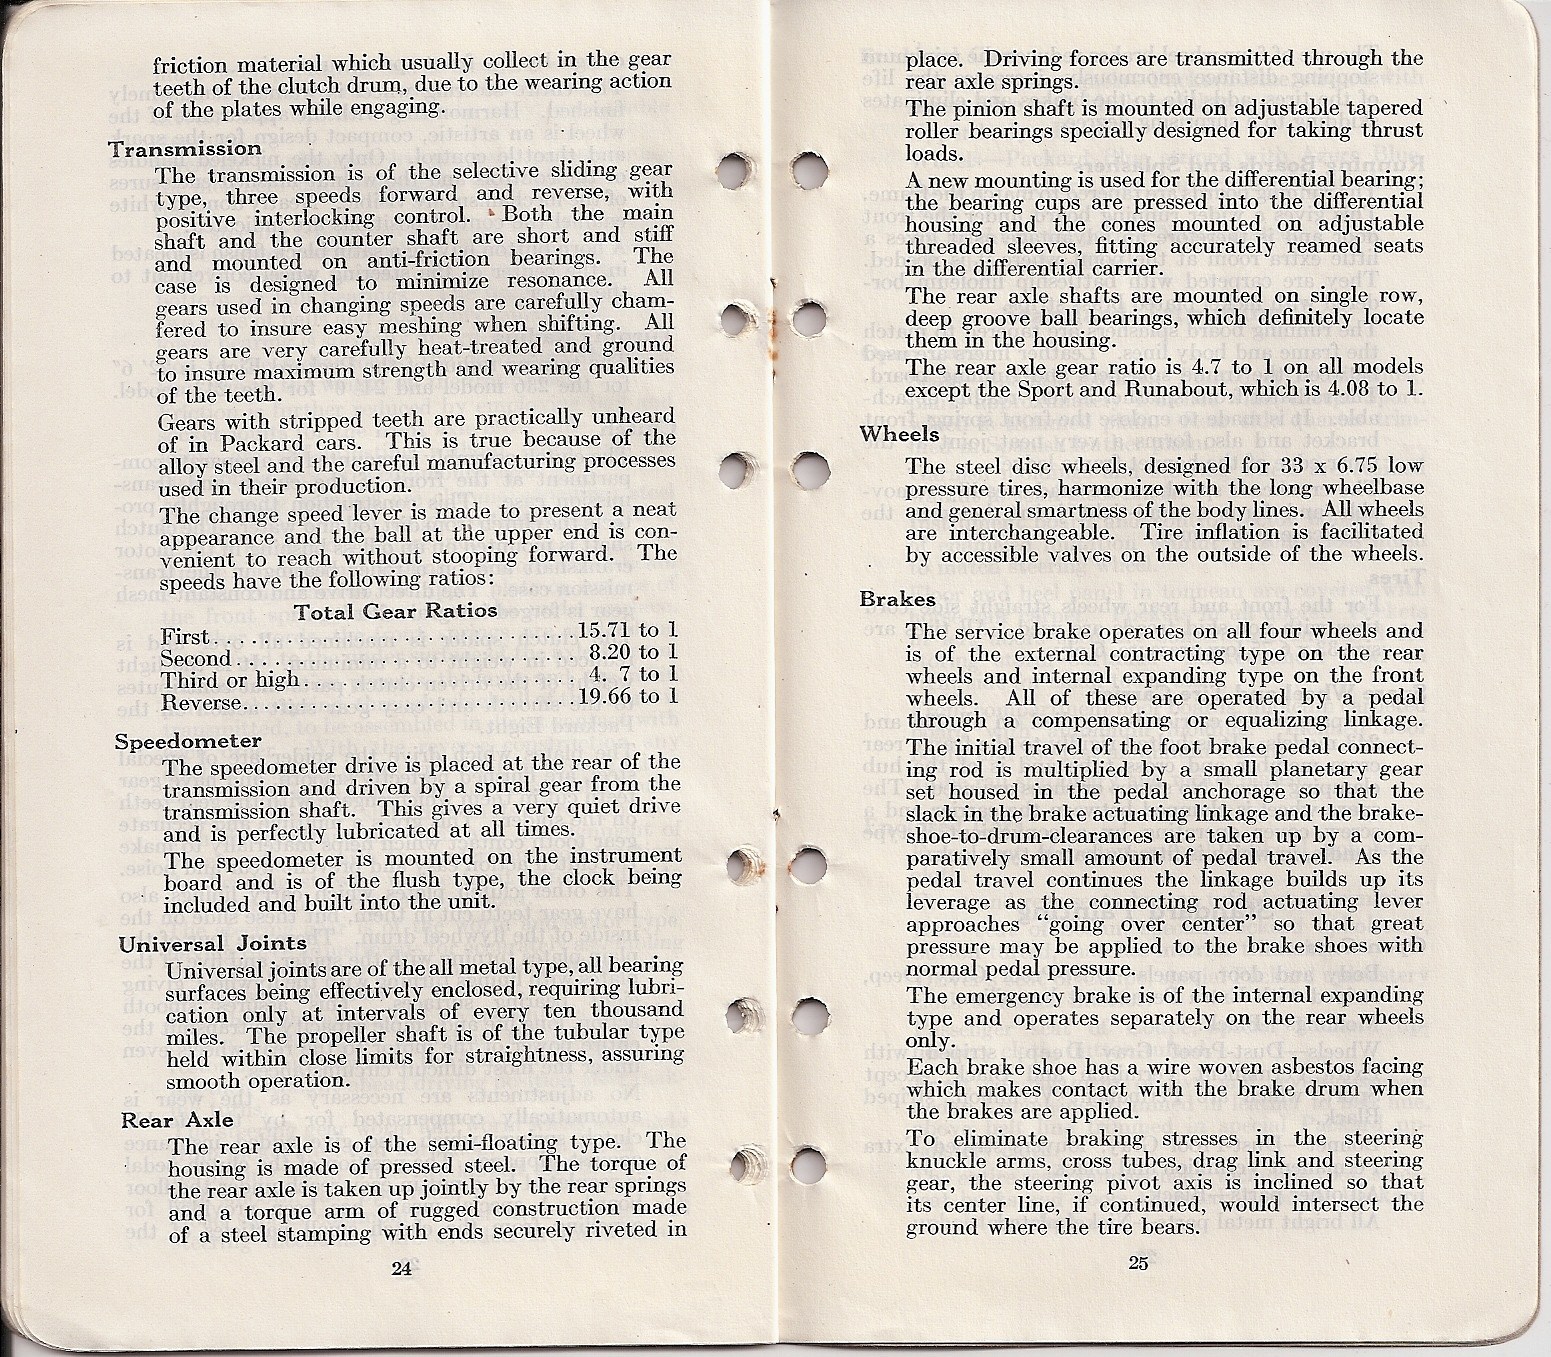 n_1925 Packard Eight Facts Book-24-25.jpg